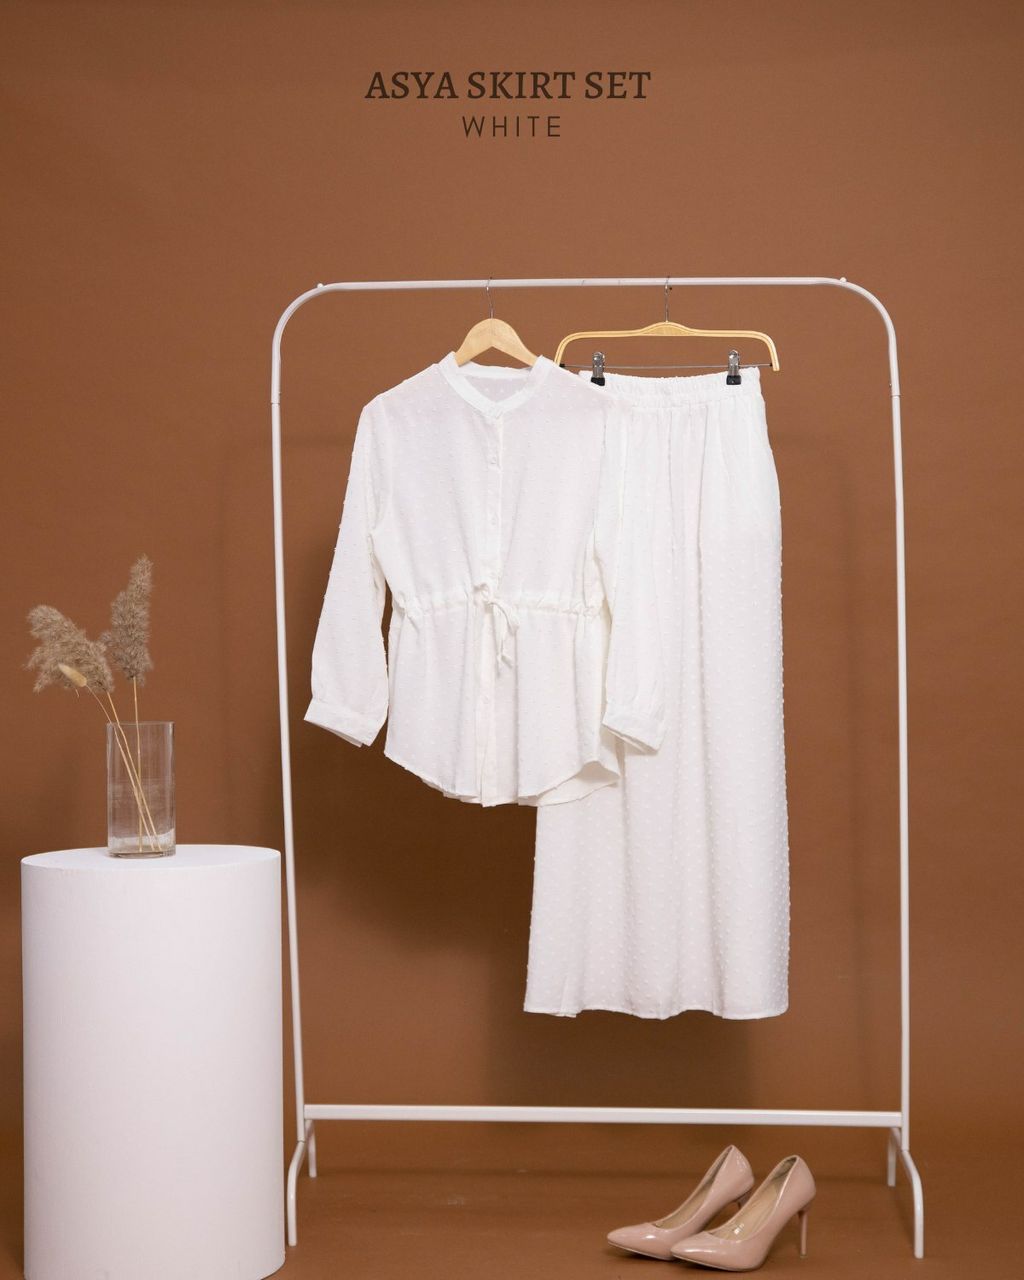 haura-wear-cotton-baju-muslimah-set-seluar-suit-muslimah-set-baju-dan-seluar-muslimah-skirt (22).jpg